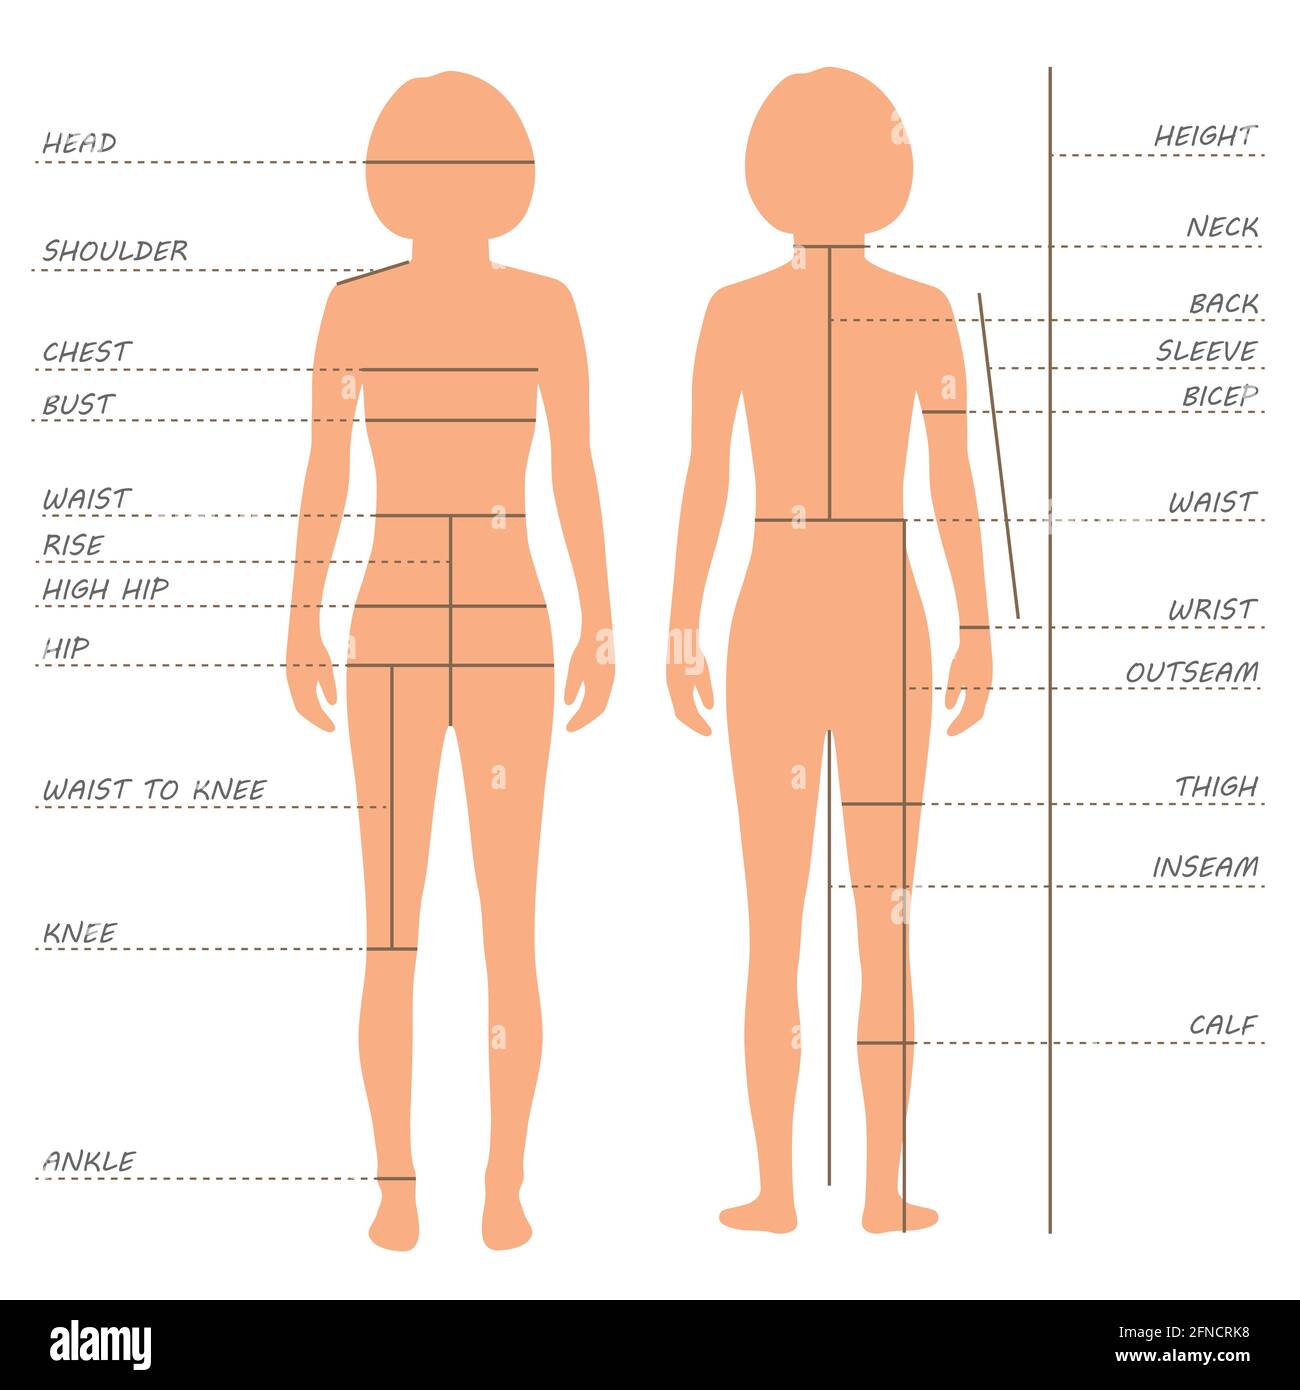 https://c8.alamy.com/comp/2FNCRK8/vector-body-measurements-size-chart-female-clothing-model-sewing-2FNCRK8.jpg